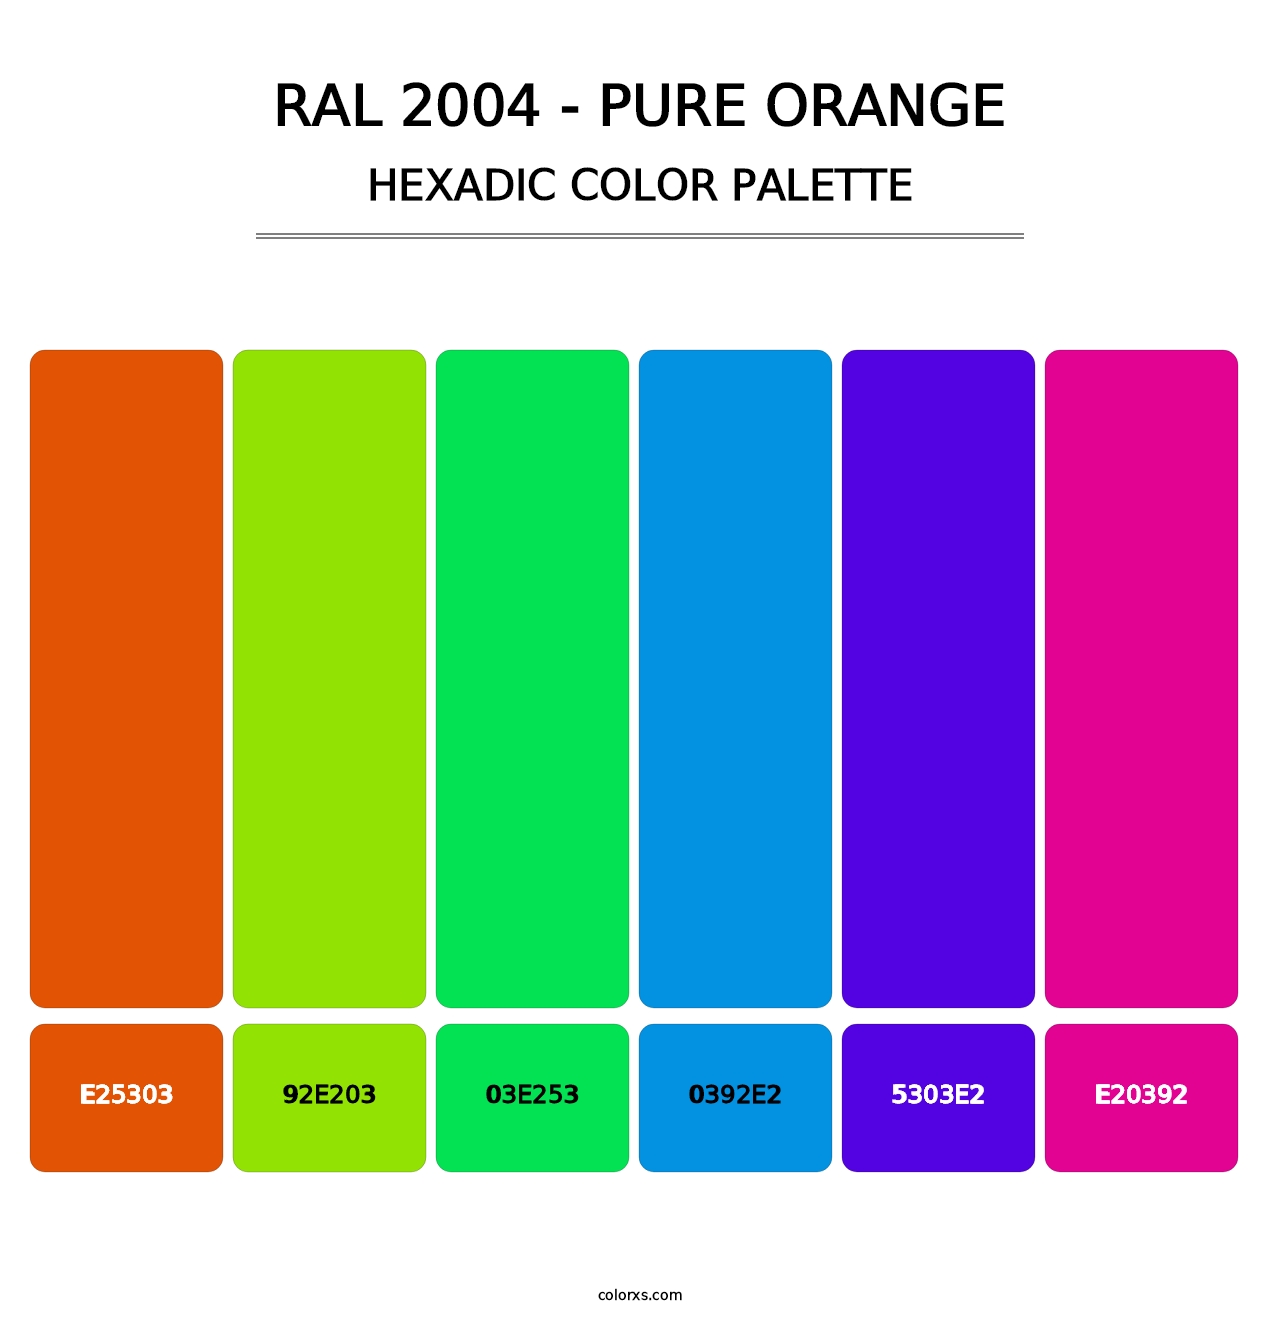 RAL 2004 - Pure Orange - Hexadic Color Palette